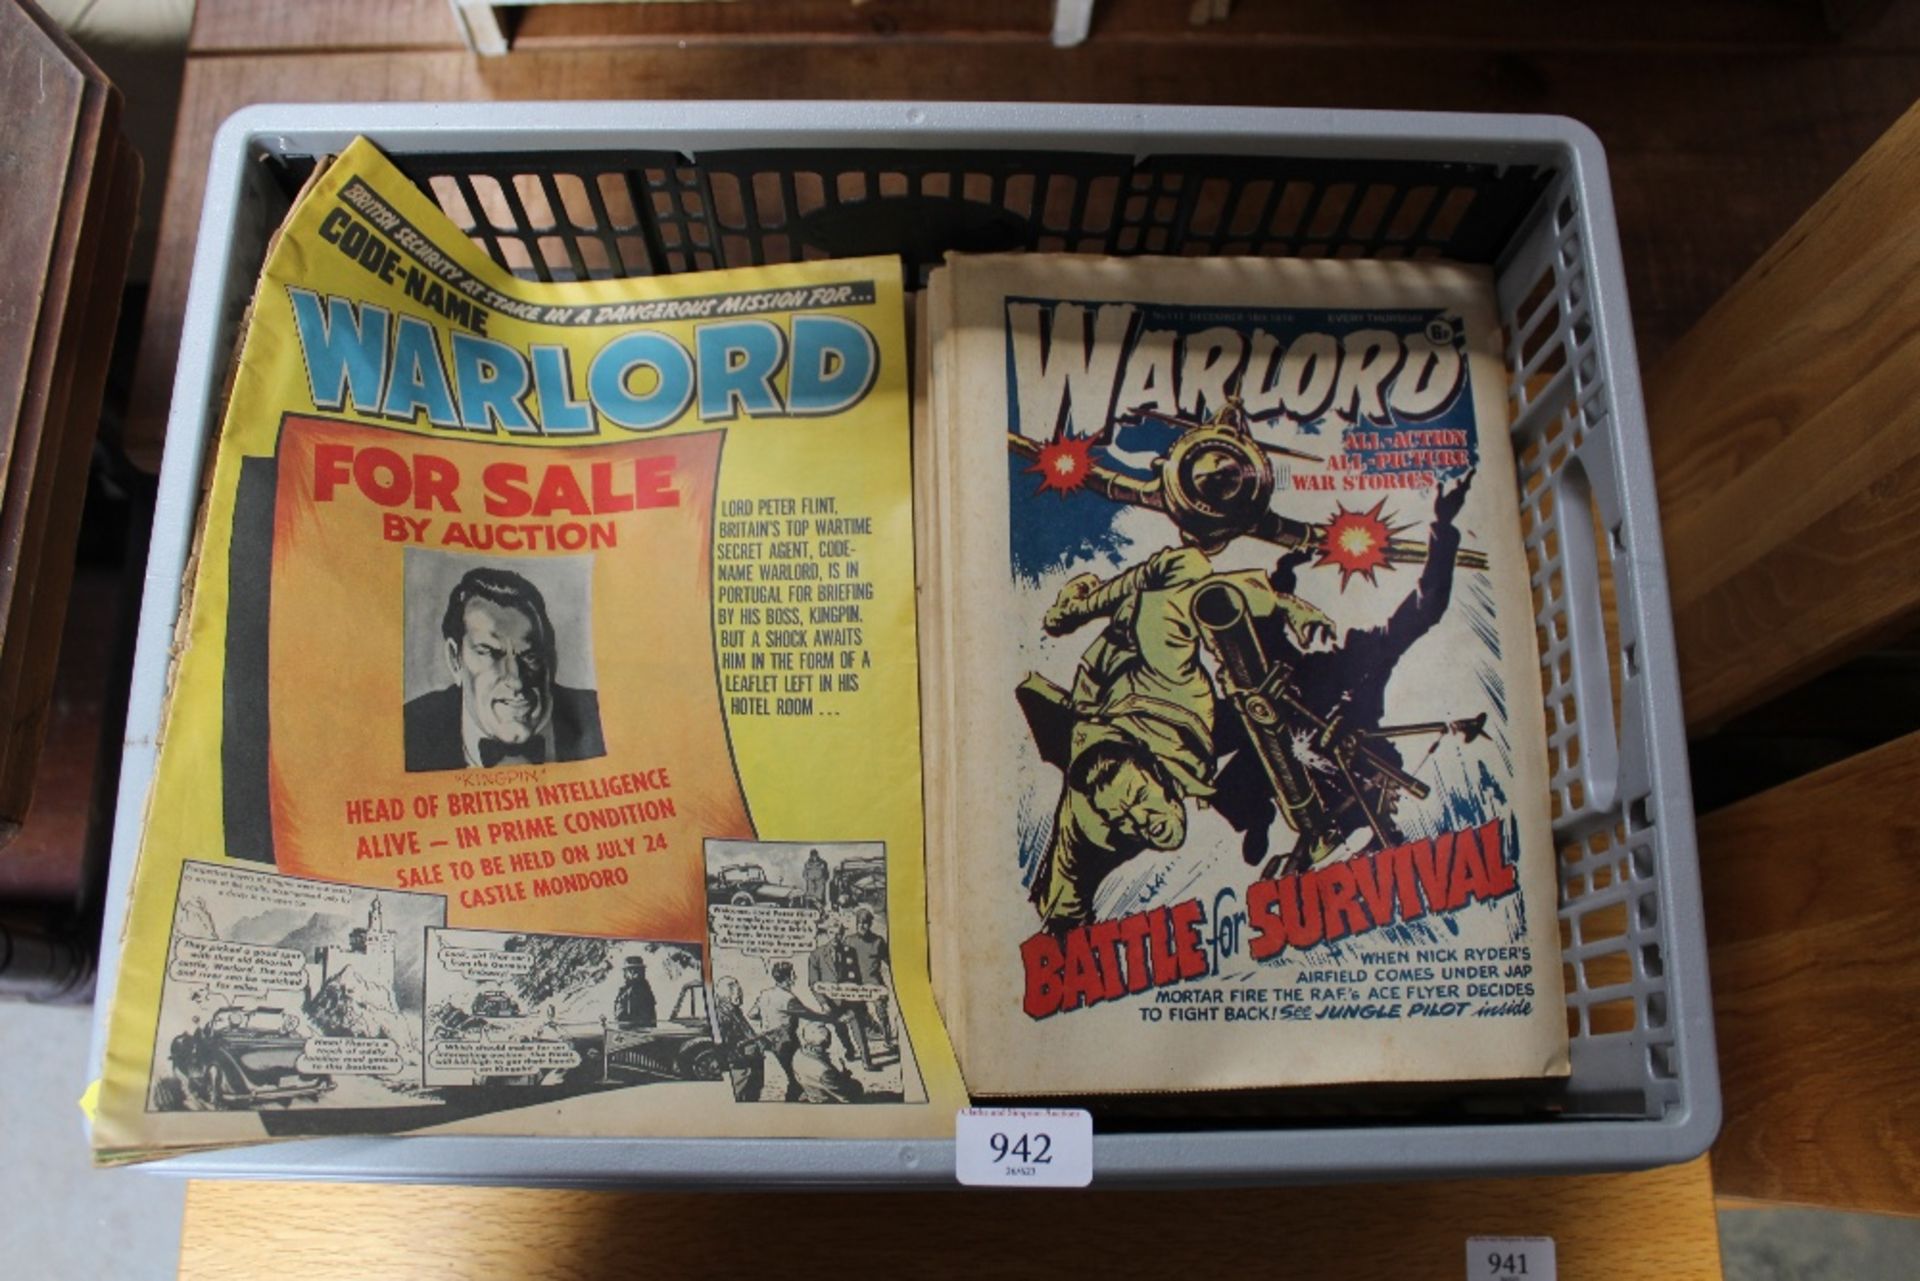 A box of 'Warlord' comic books